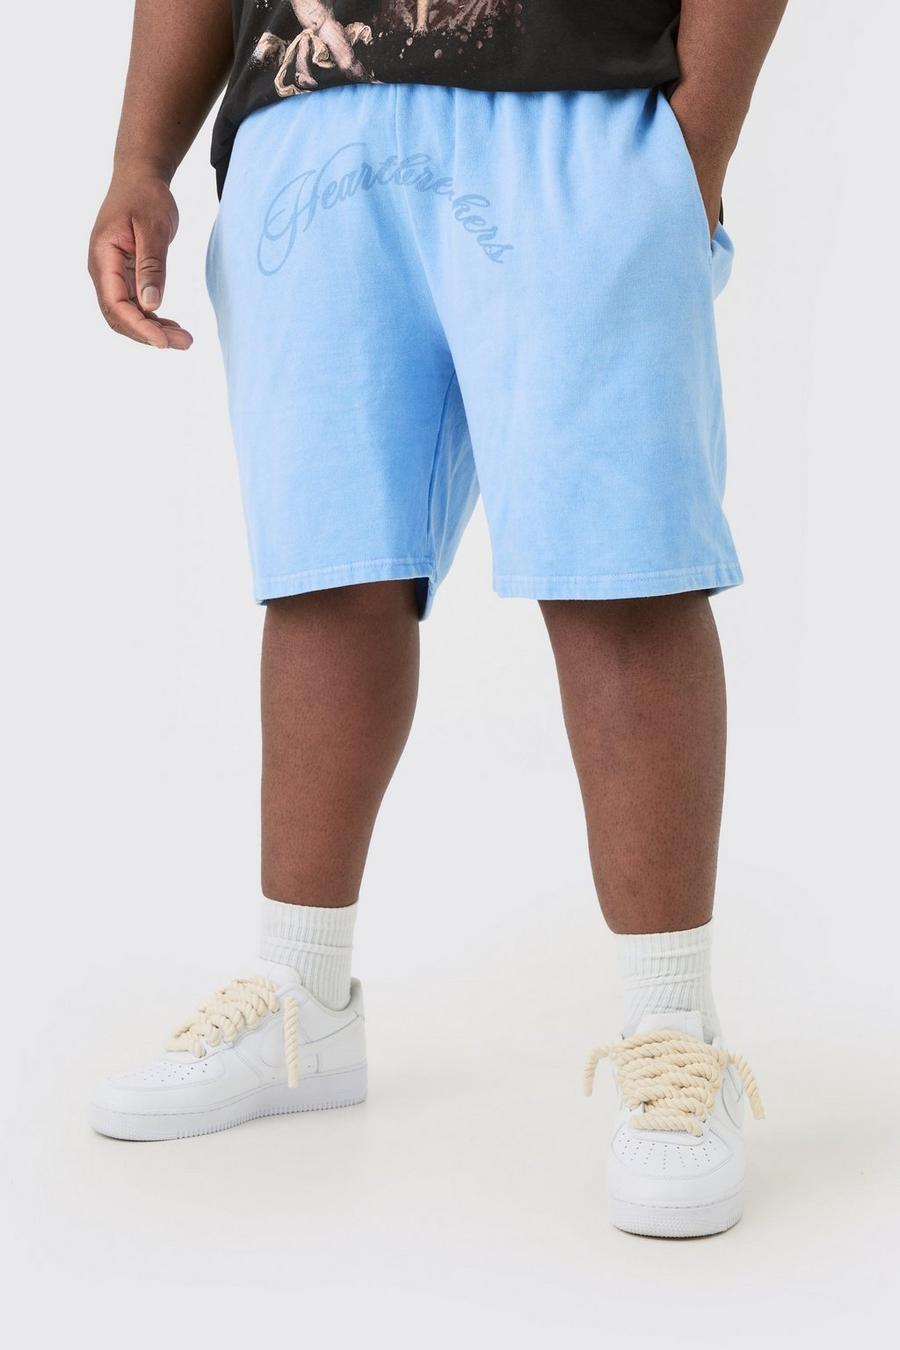 Pantalones cortos Plus oversize azules con estampado Hearbreakers, Blue image number 1